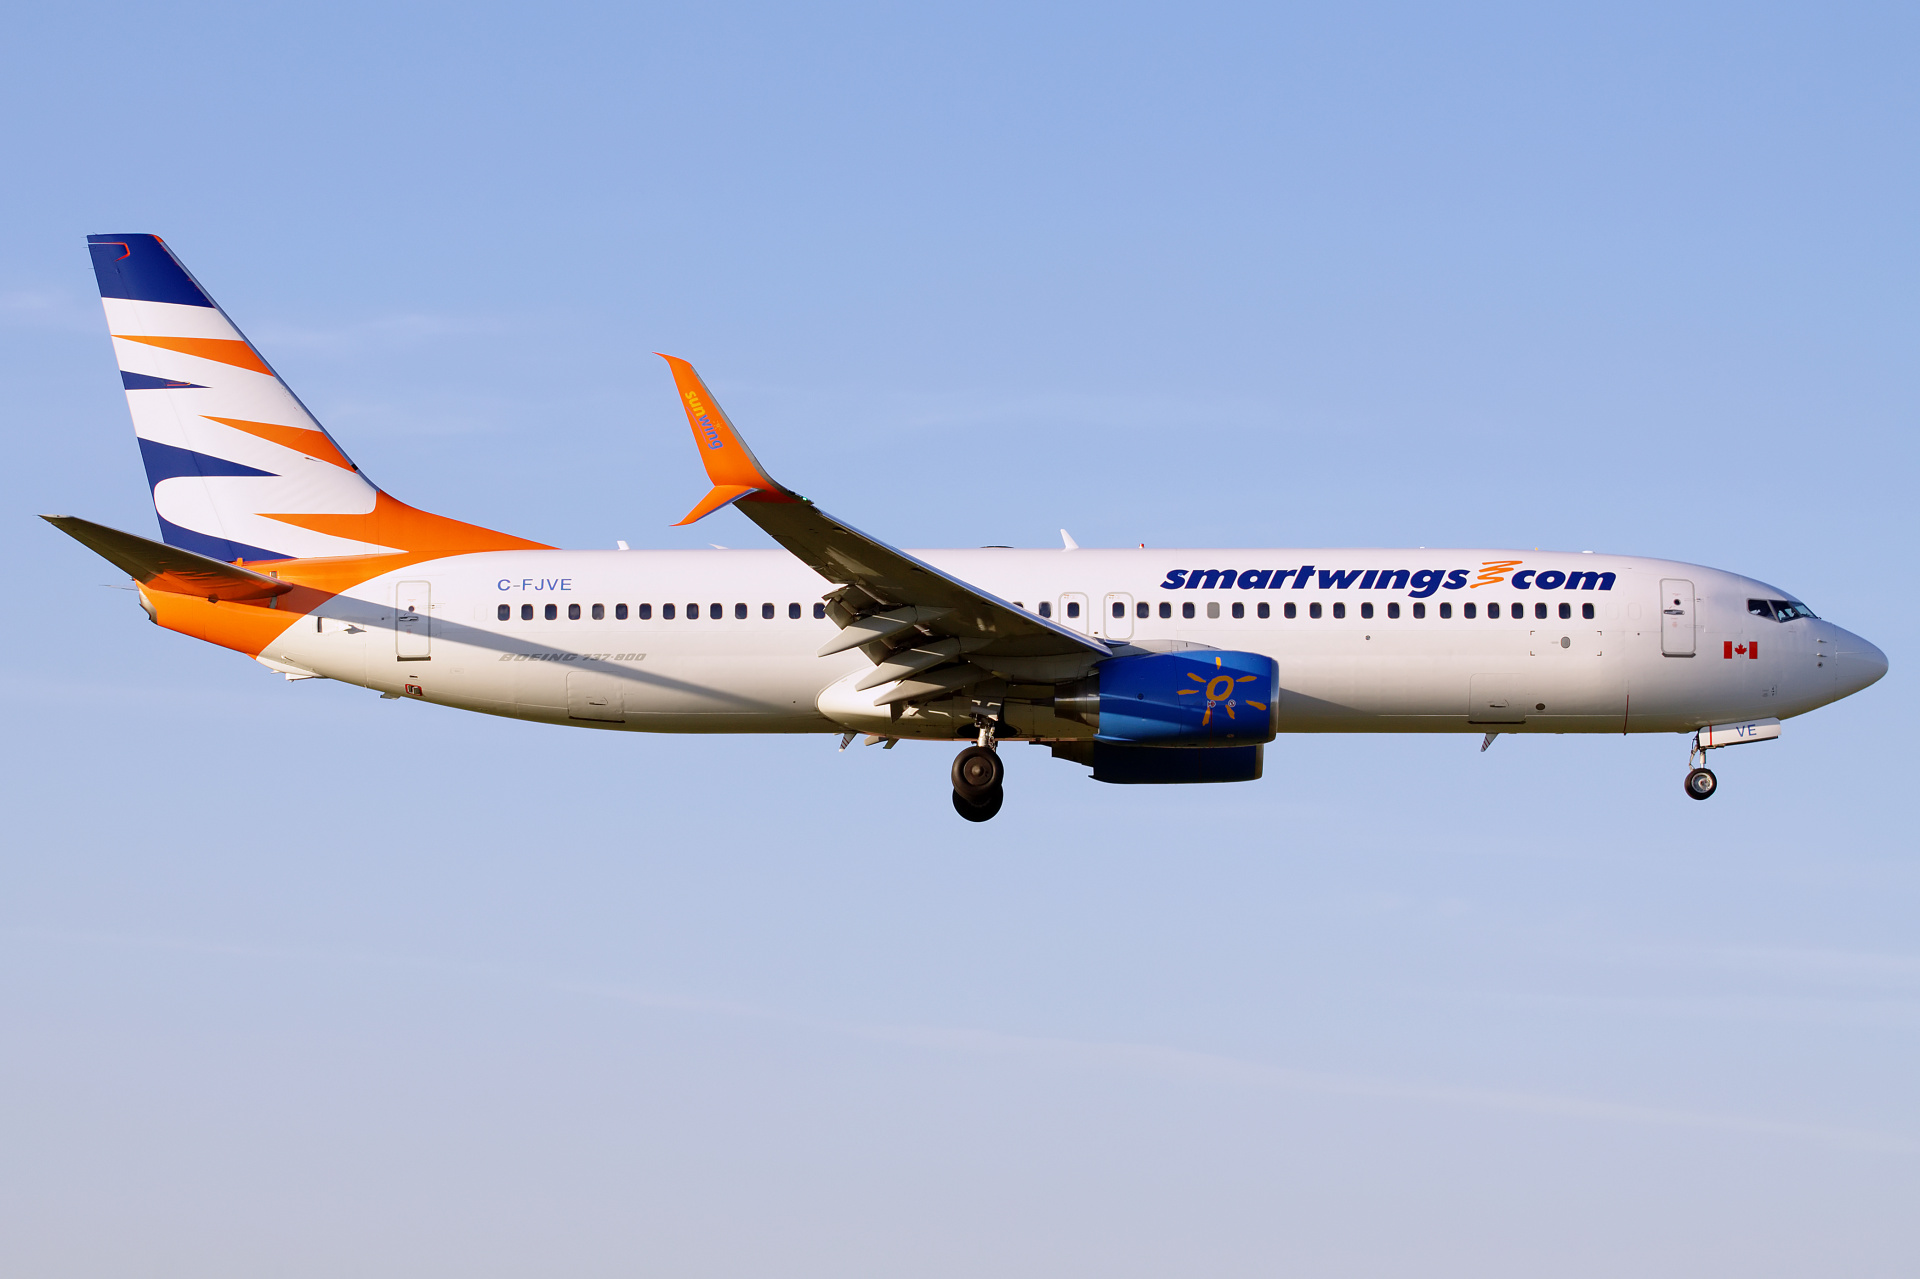 C-FJVE (Sunwing) (Aircraft » EPWA Spotting » Boeing 737-800 » SmartWings)